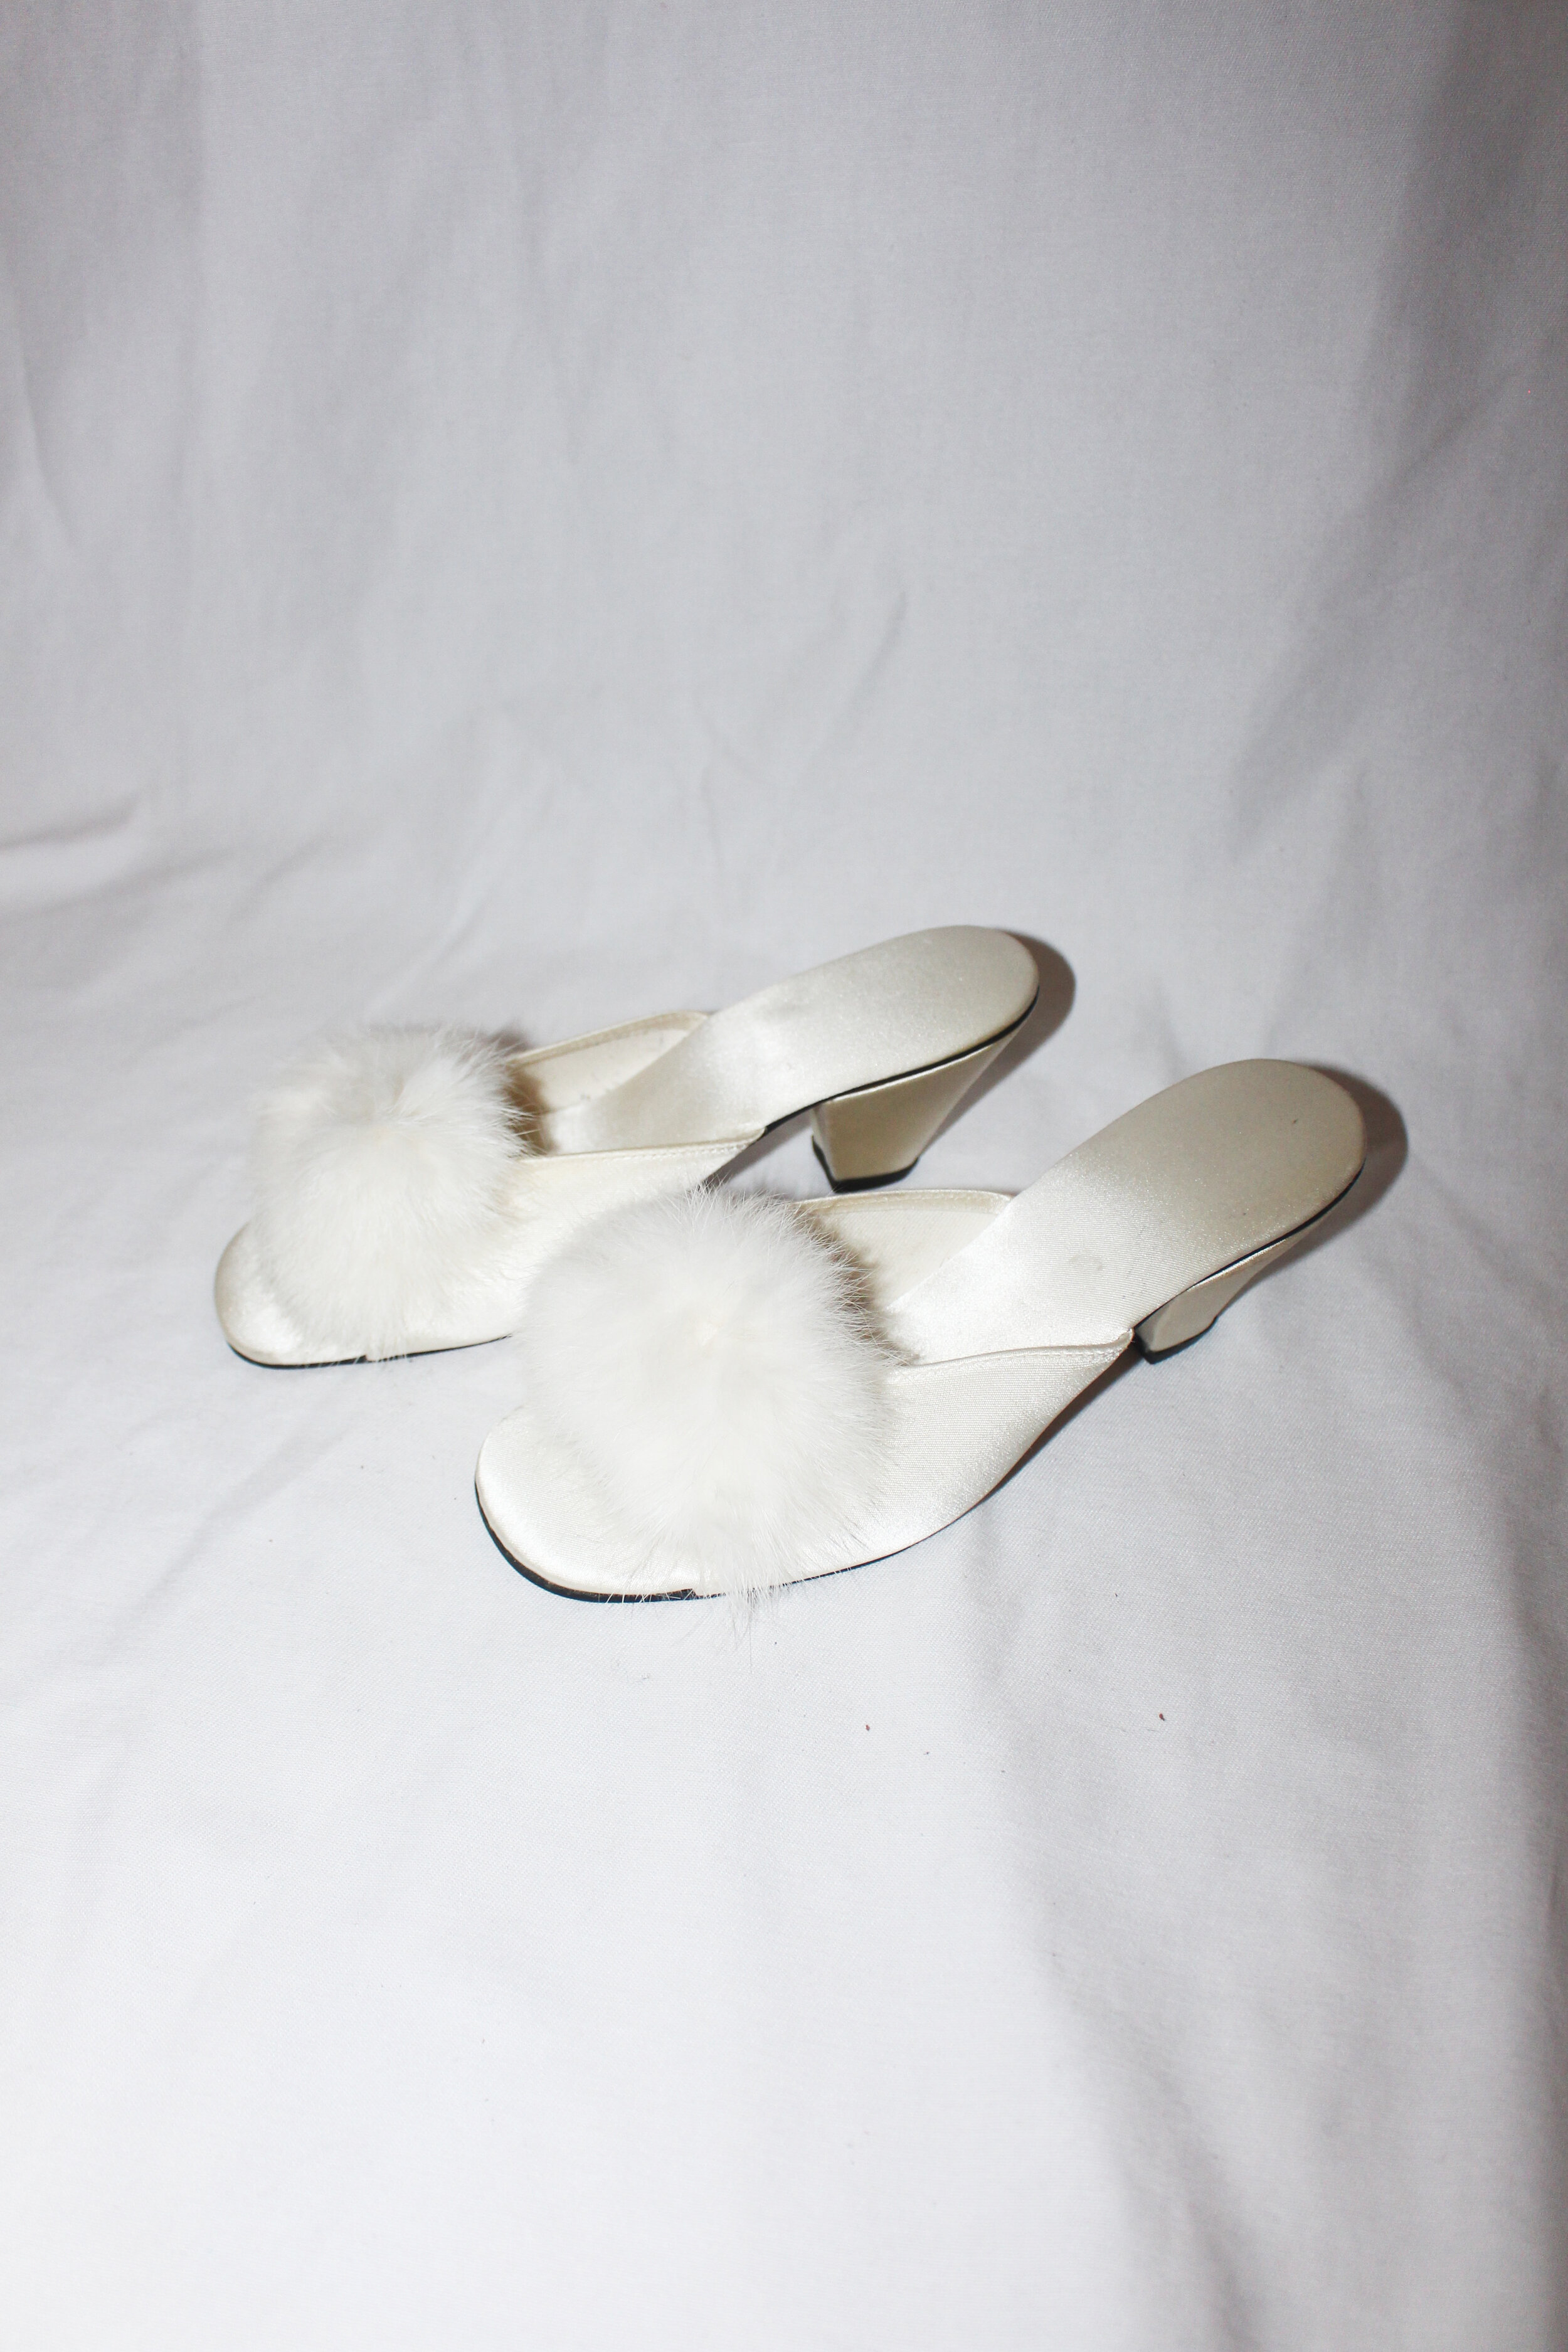 white satin slippers